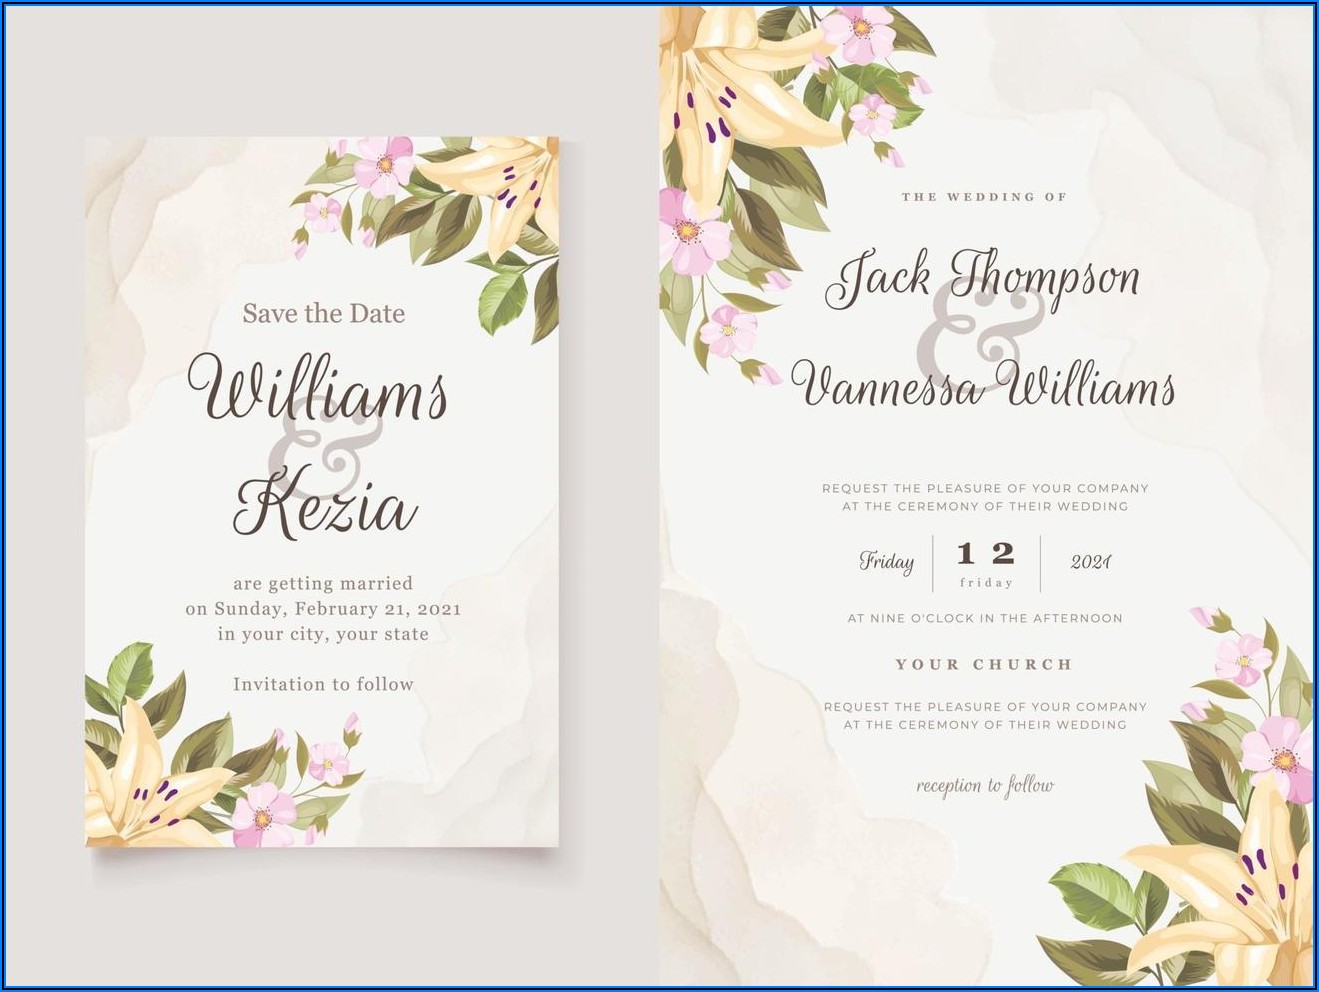 Floral Wedding Invitation Vector Free Download